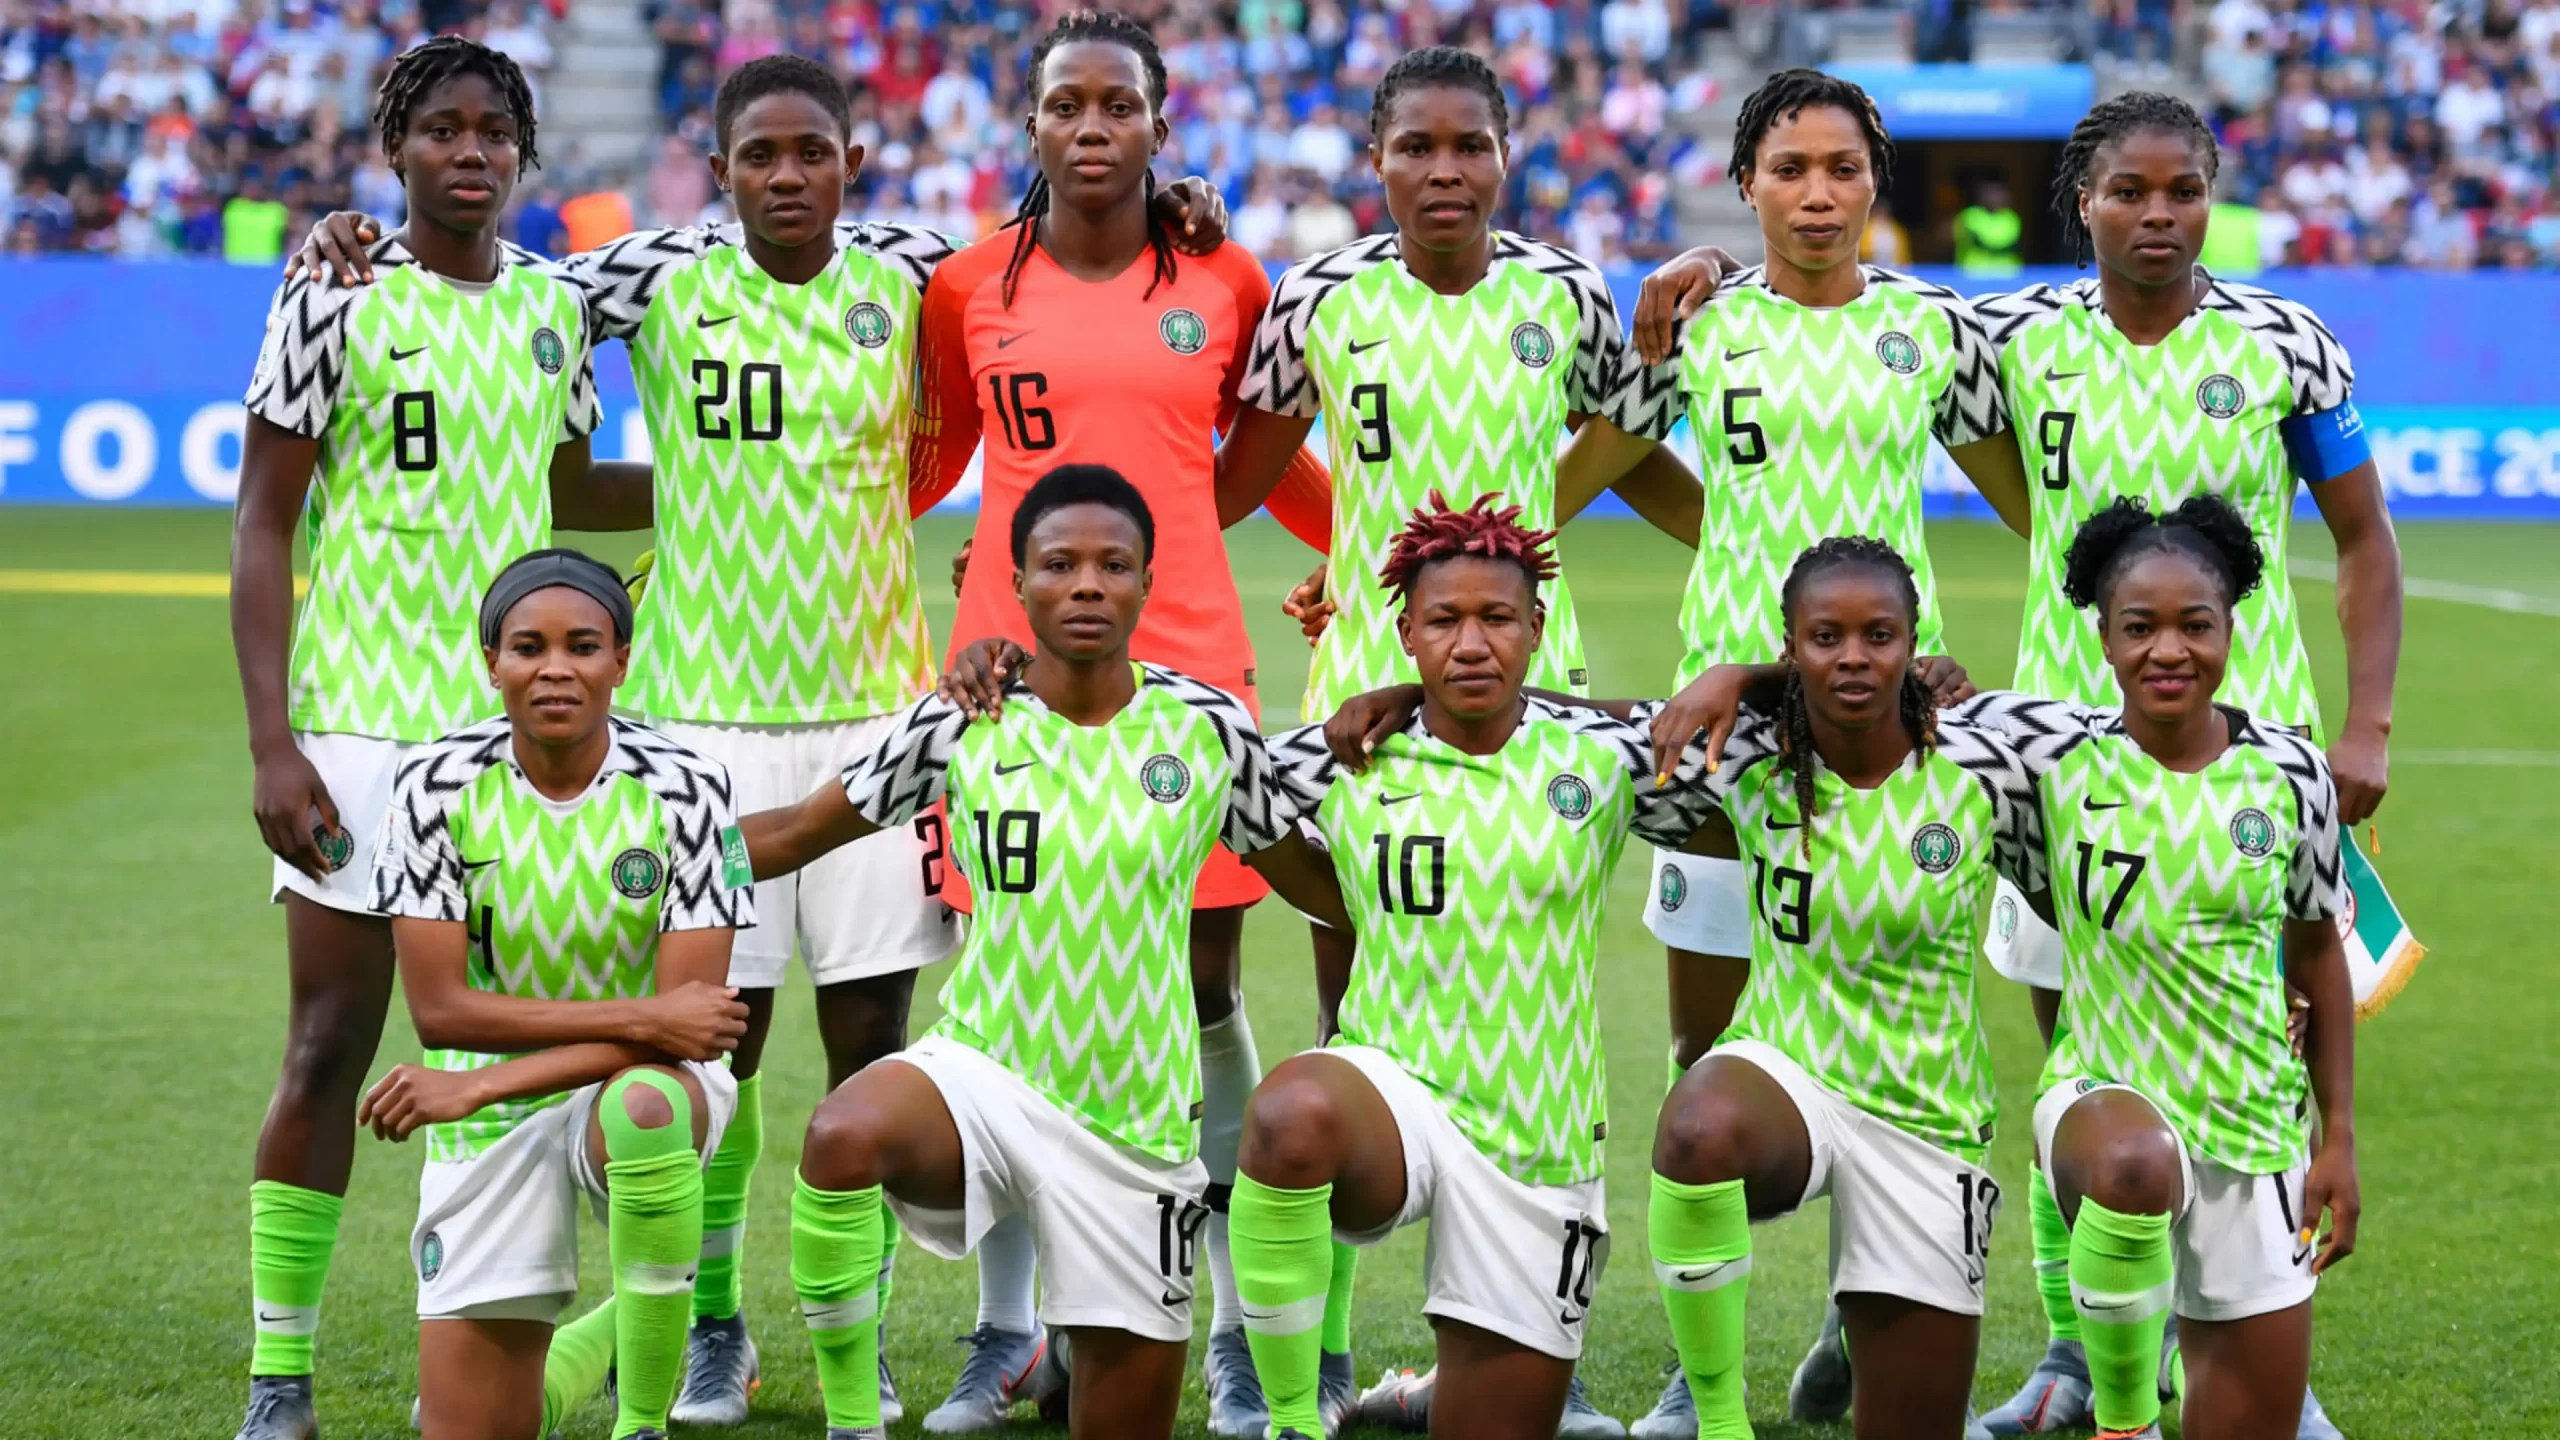 Nigeria Women vs Canada Women - Match preview, Live stream, kick-off time, prediction, team news, lineups
